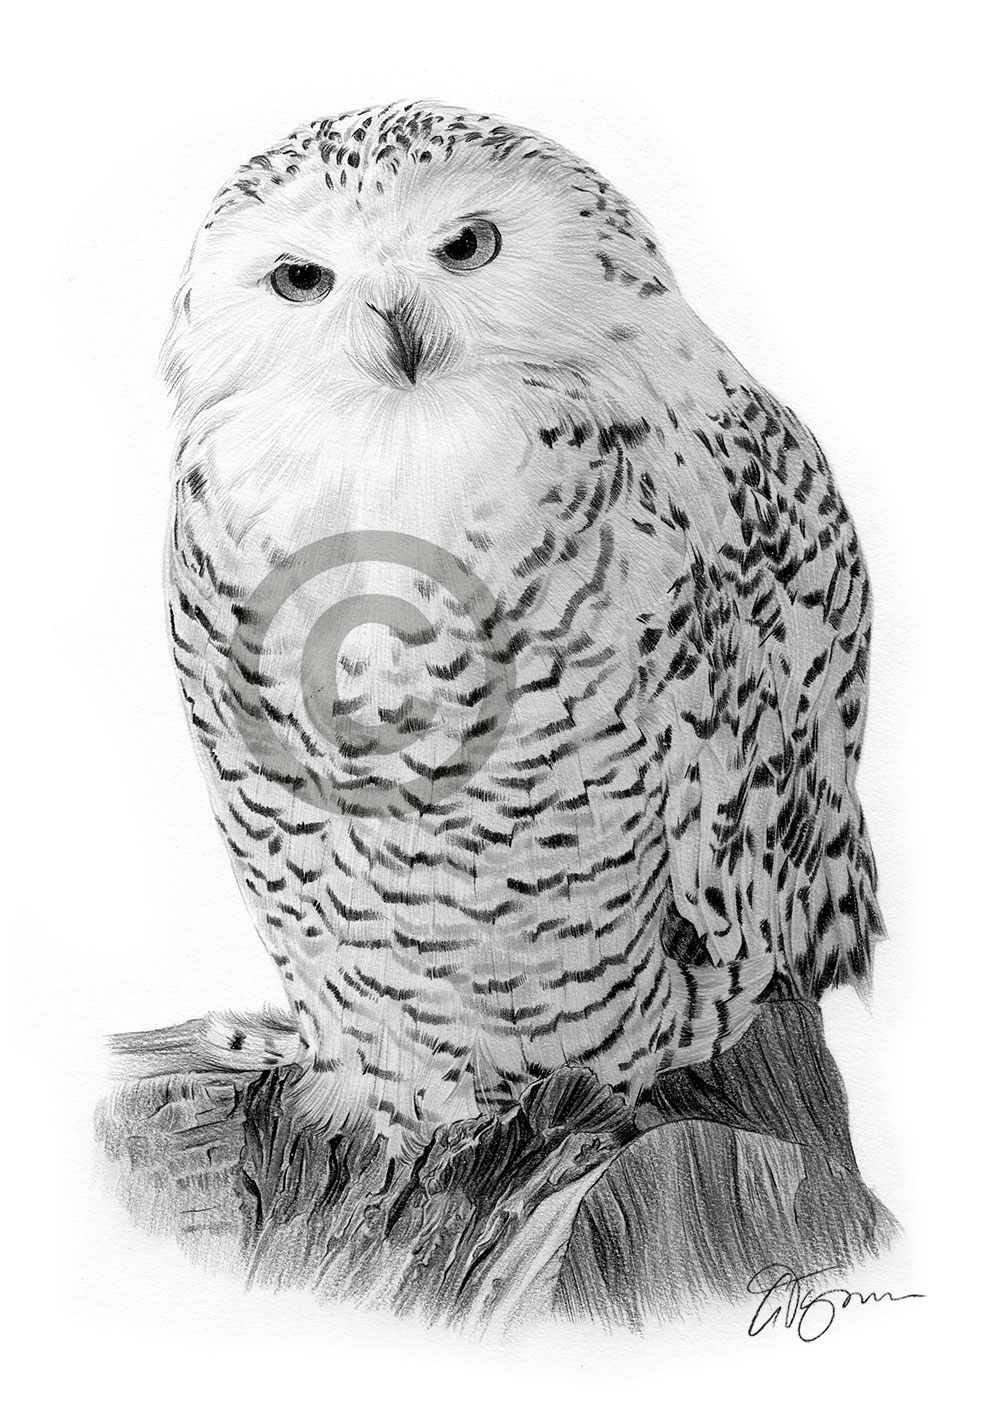 Pencil drawing of a snowy owl by artist Gary Tymon